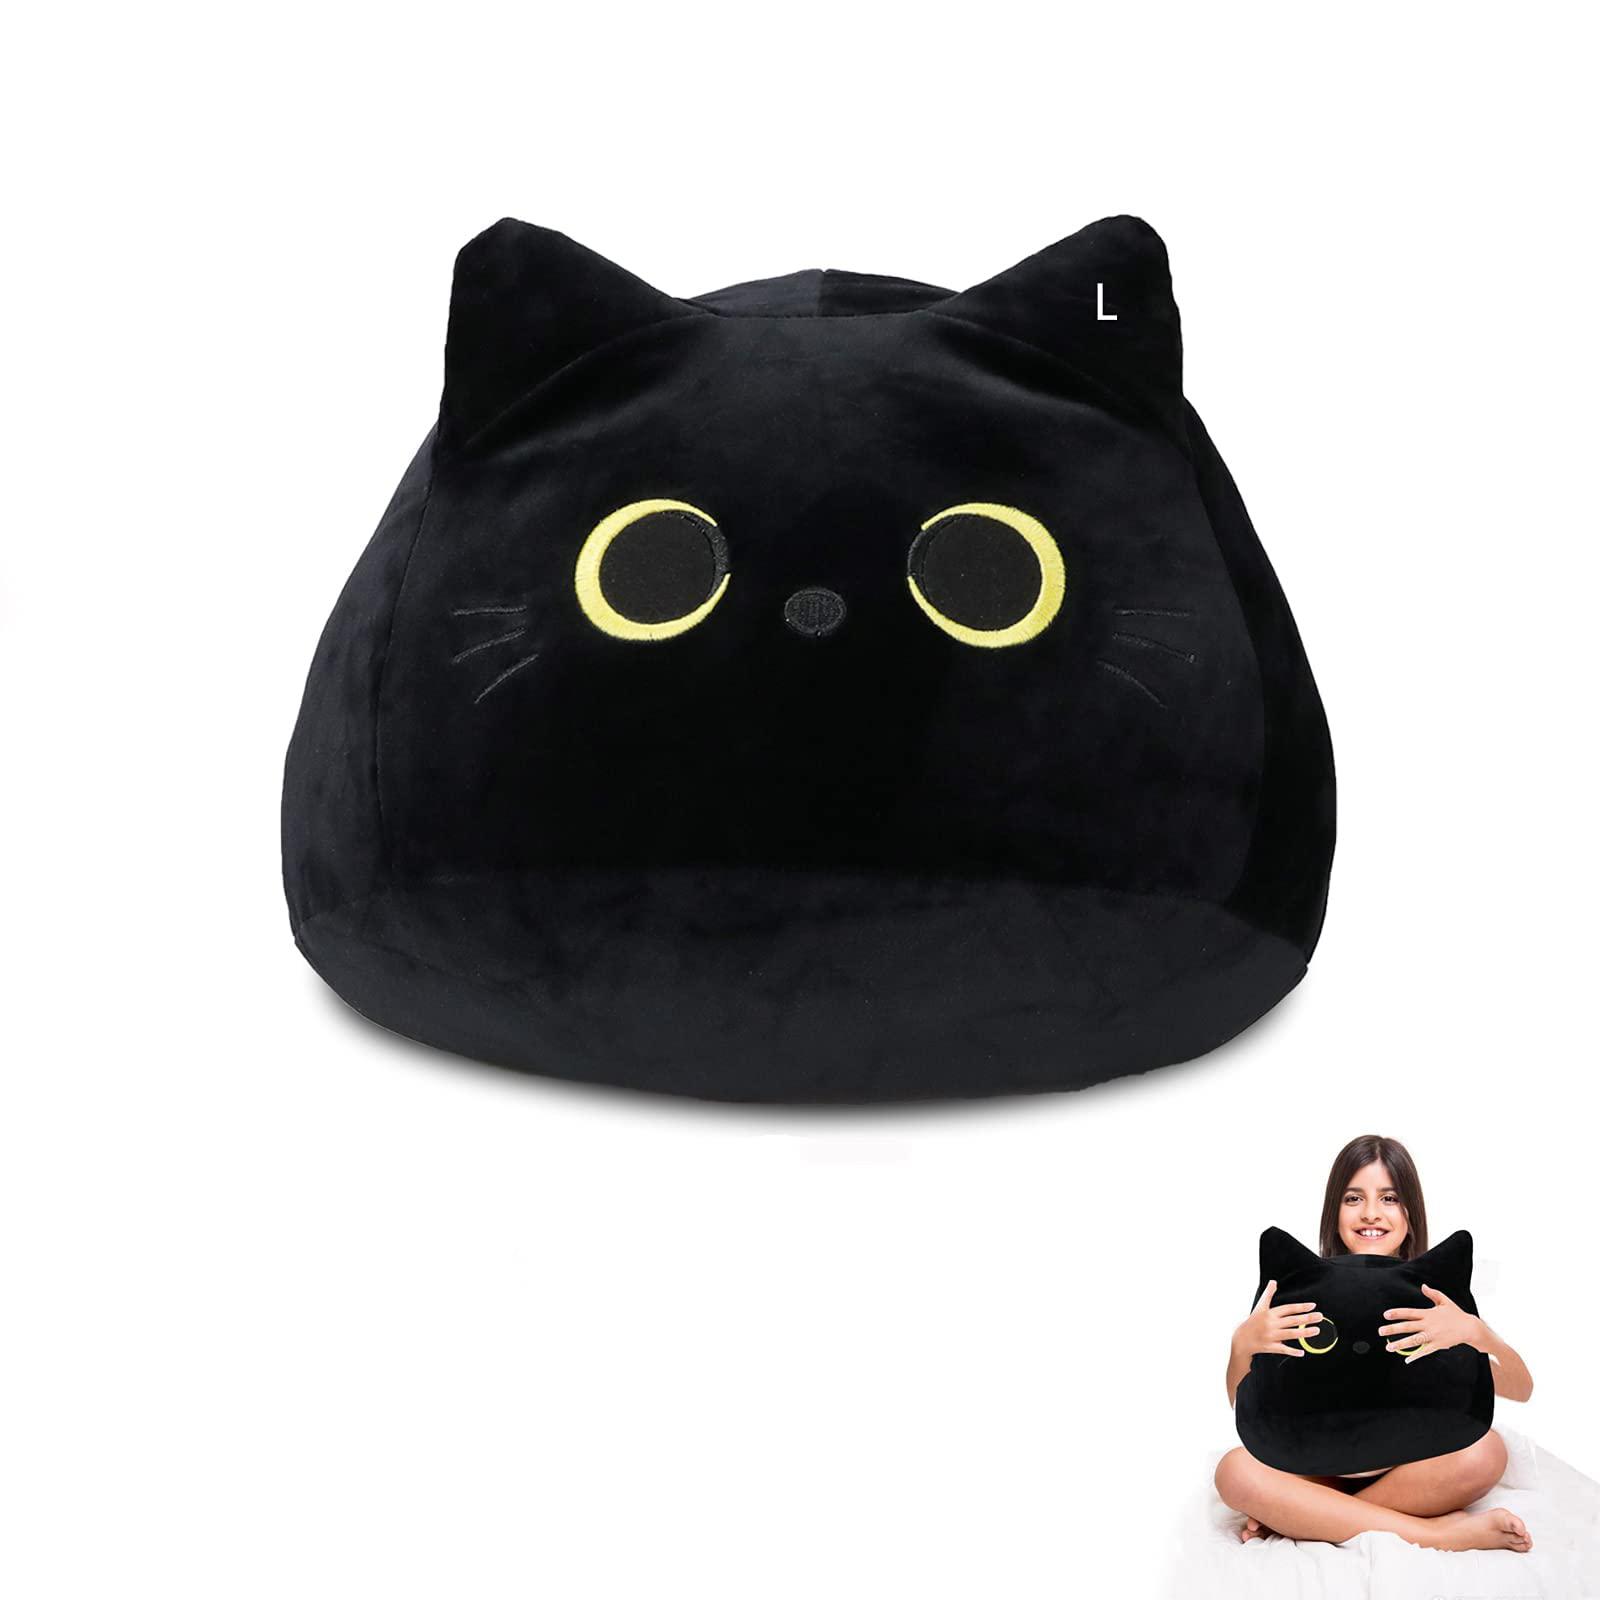 bisceolife plush toy black cat, cat plush toy pillow, creative cat shape pillow, cute cat plush toy gift for girl boy girlfri